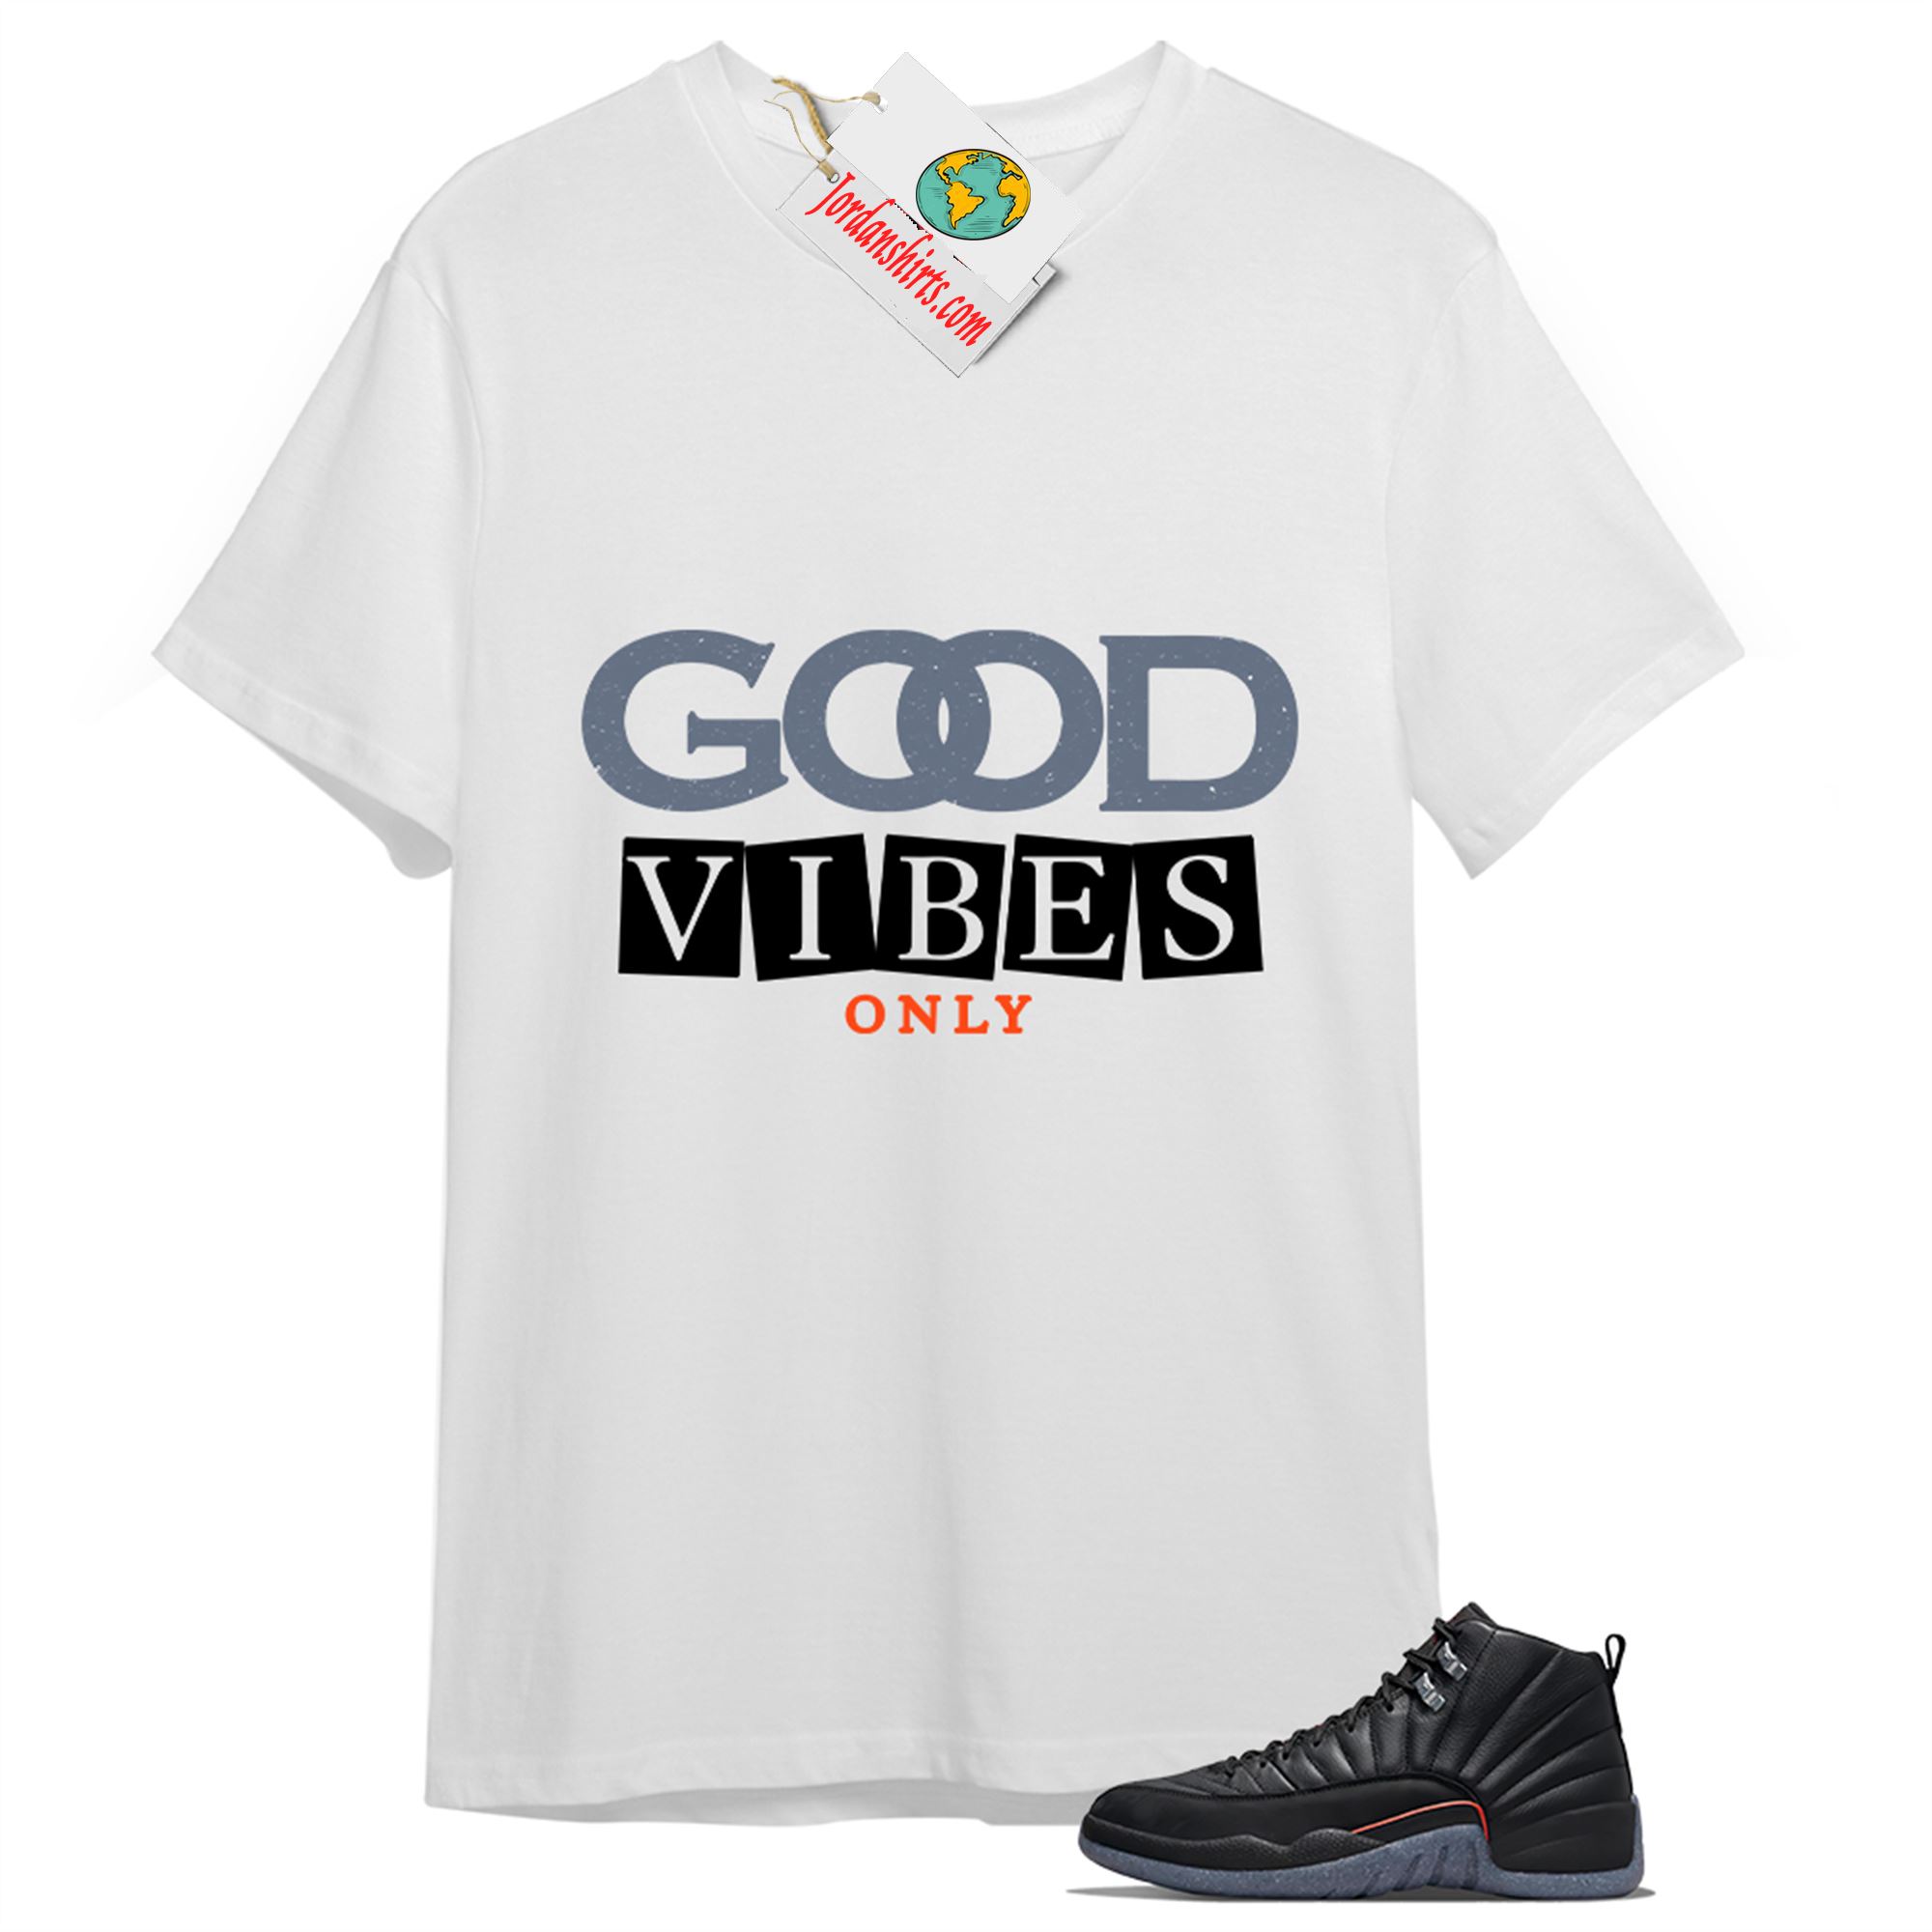 Jordan 12 Shirt, Good Vibes Only White T-shirt Air Jordan 12 Utility Grind 12s Full Size Up To 5xl